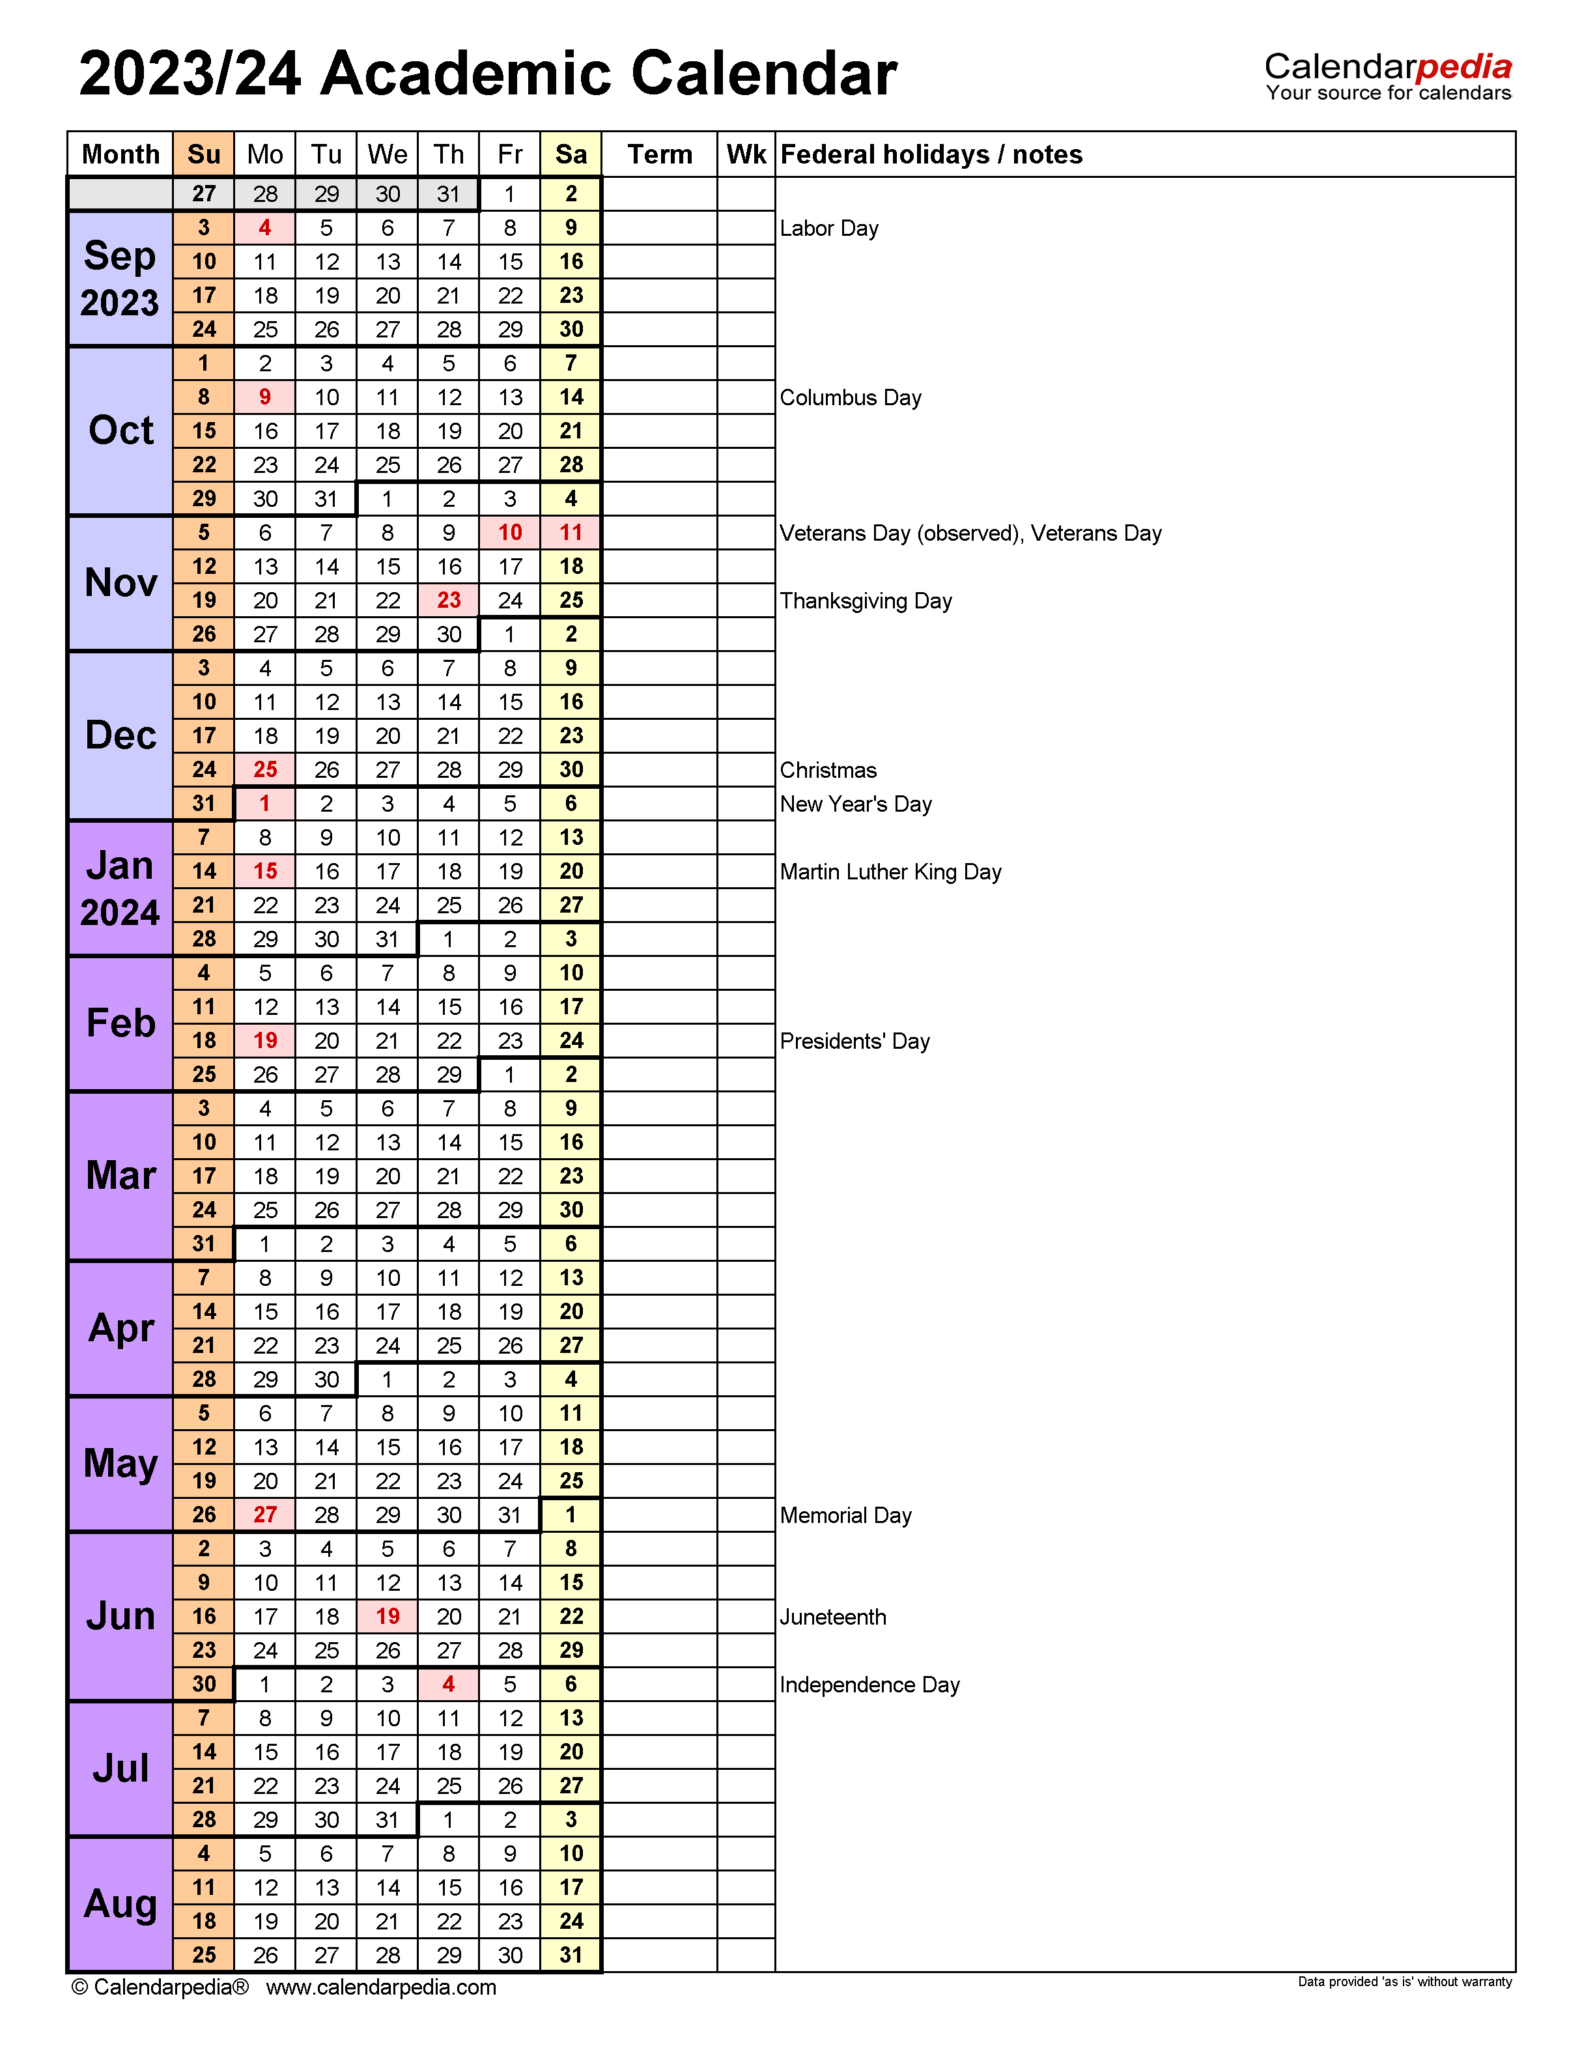 Apu Academic Calendar 2023 2023 Calendar